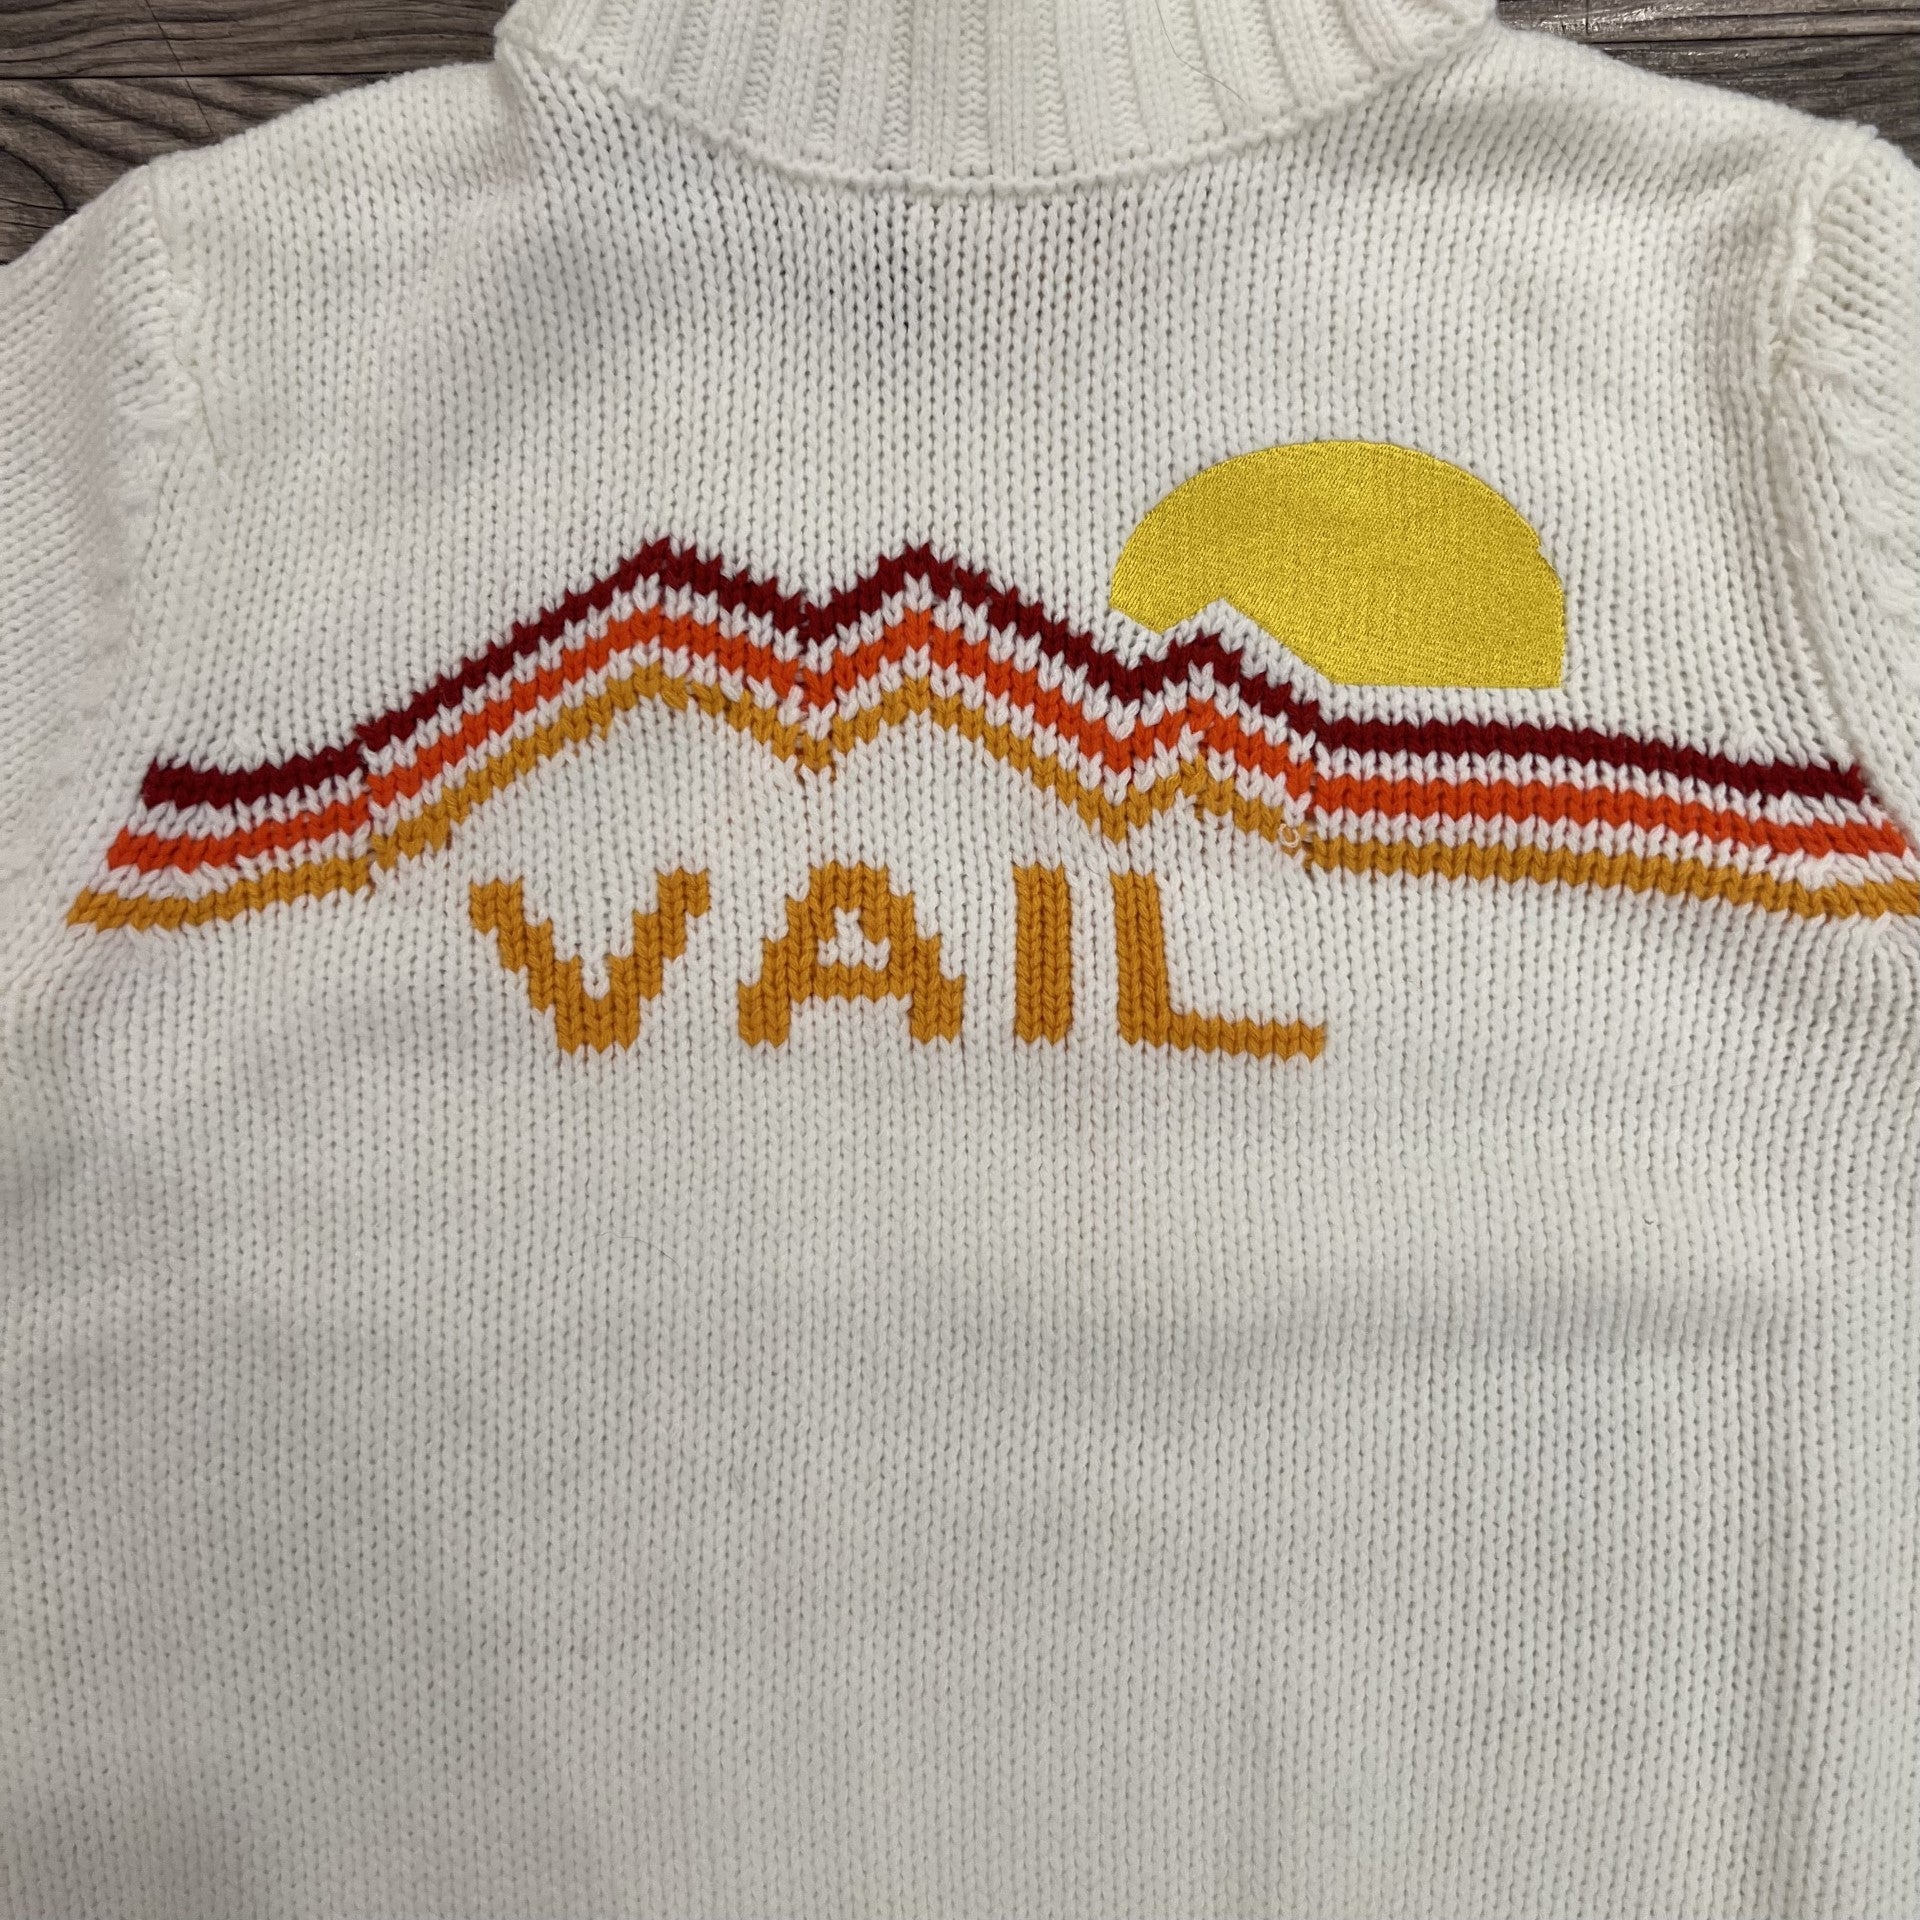 Retro Vail Sweater